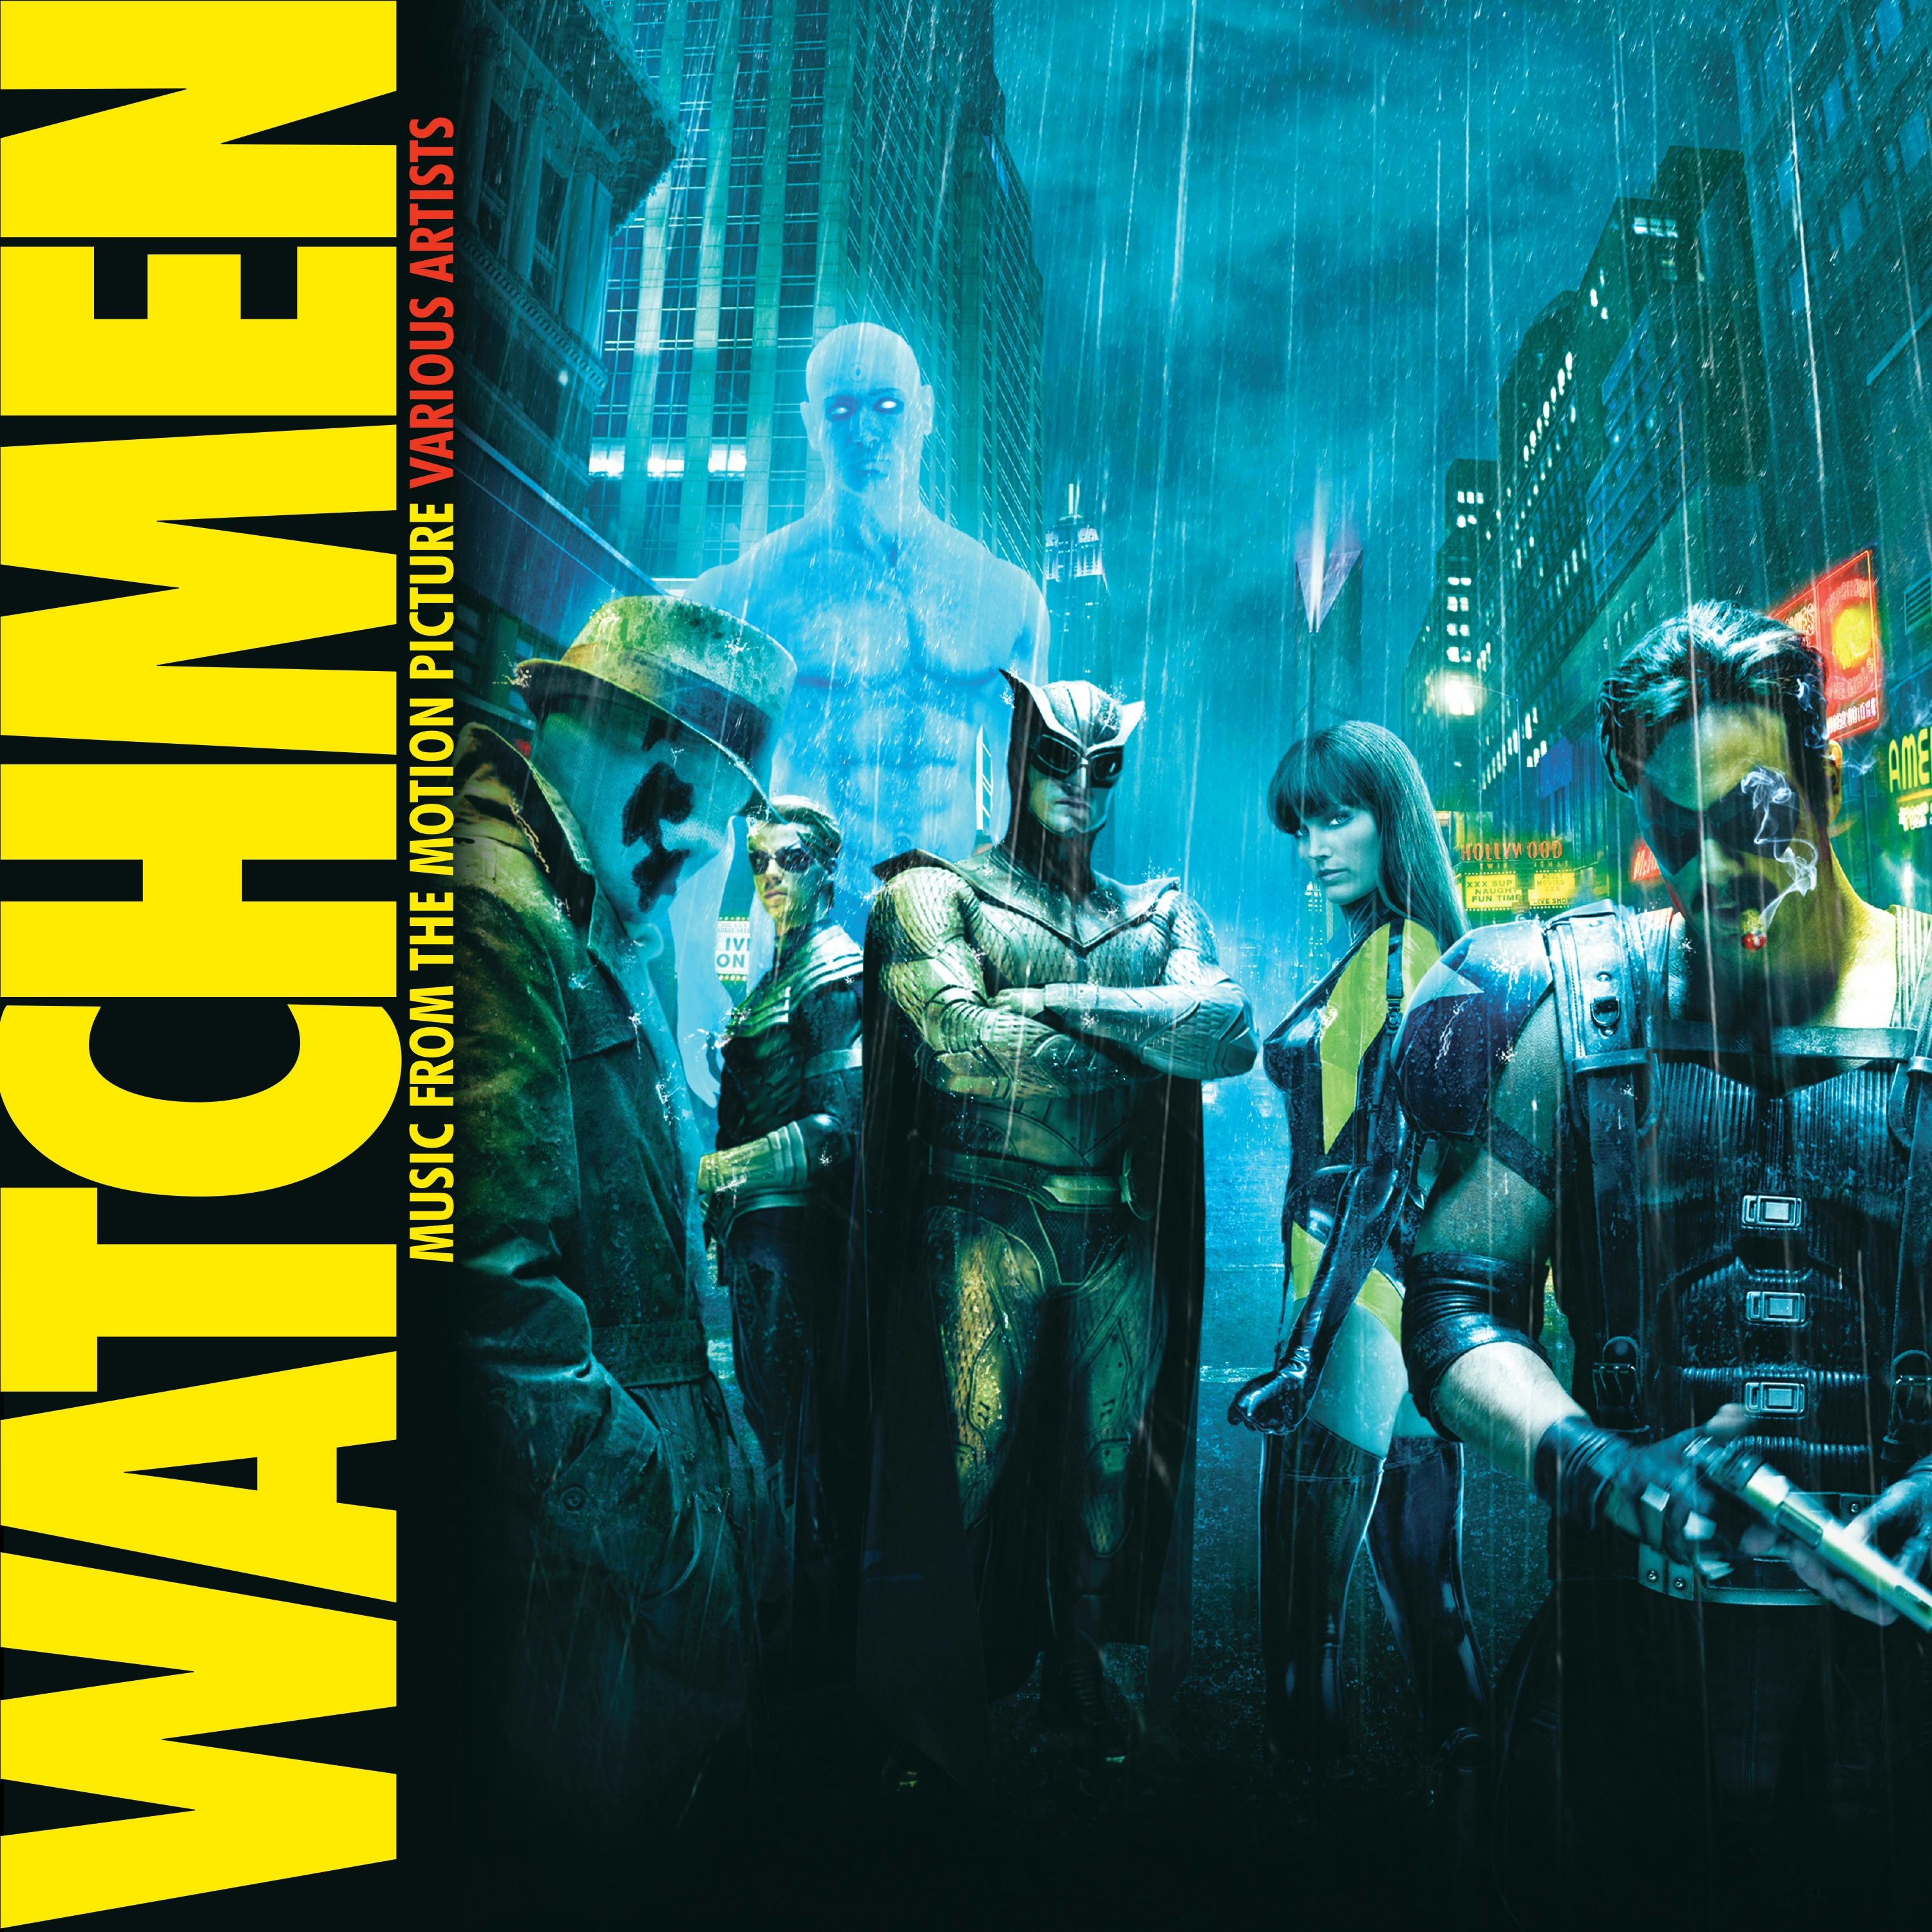 Album artwork for Watchmen Original Soundtrack by Tyler Bates